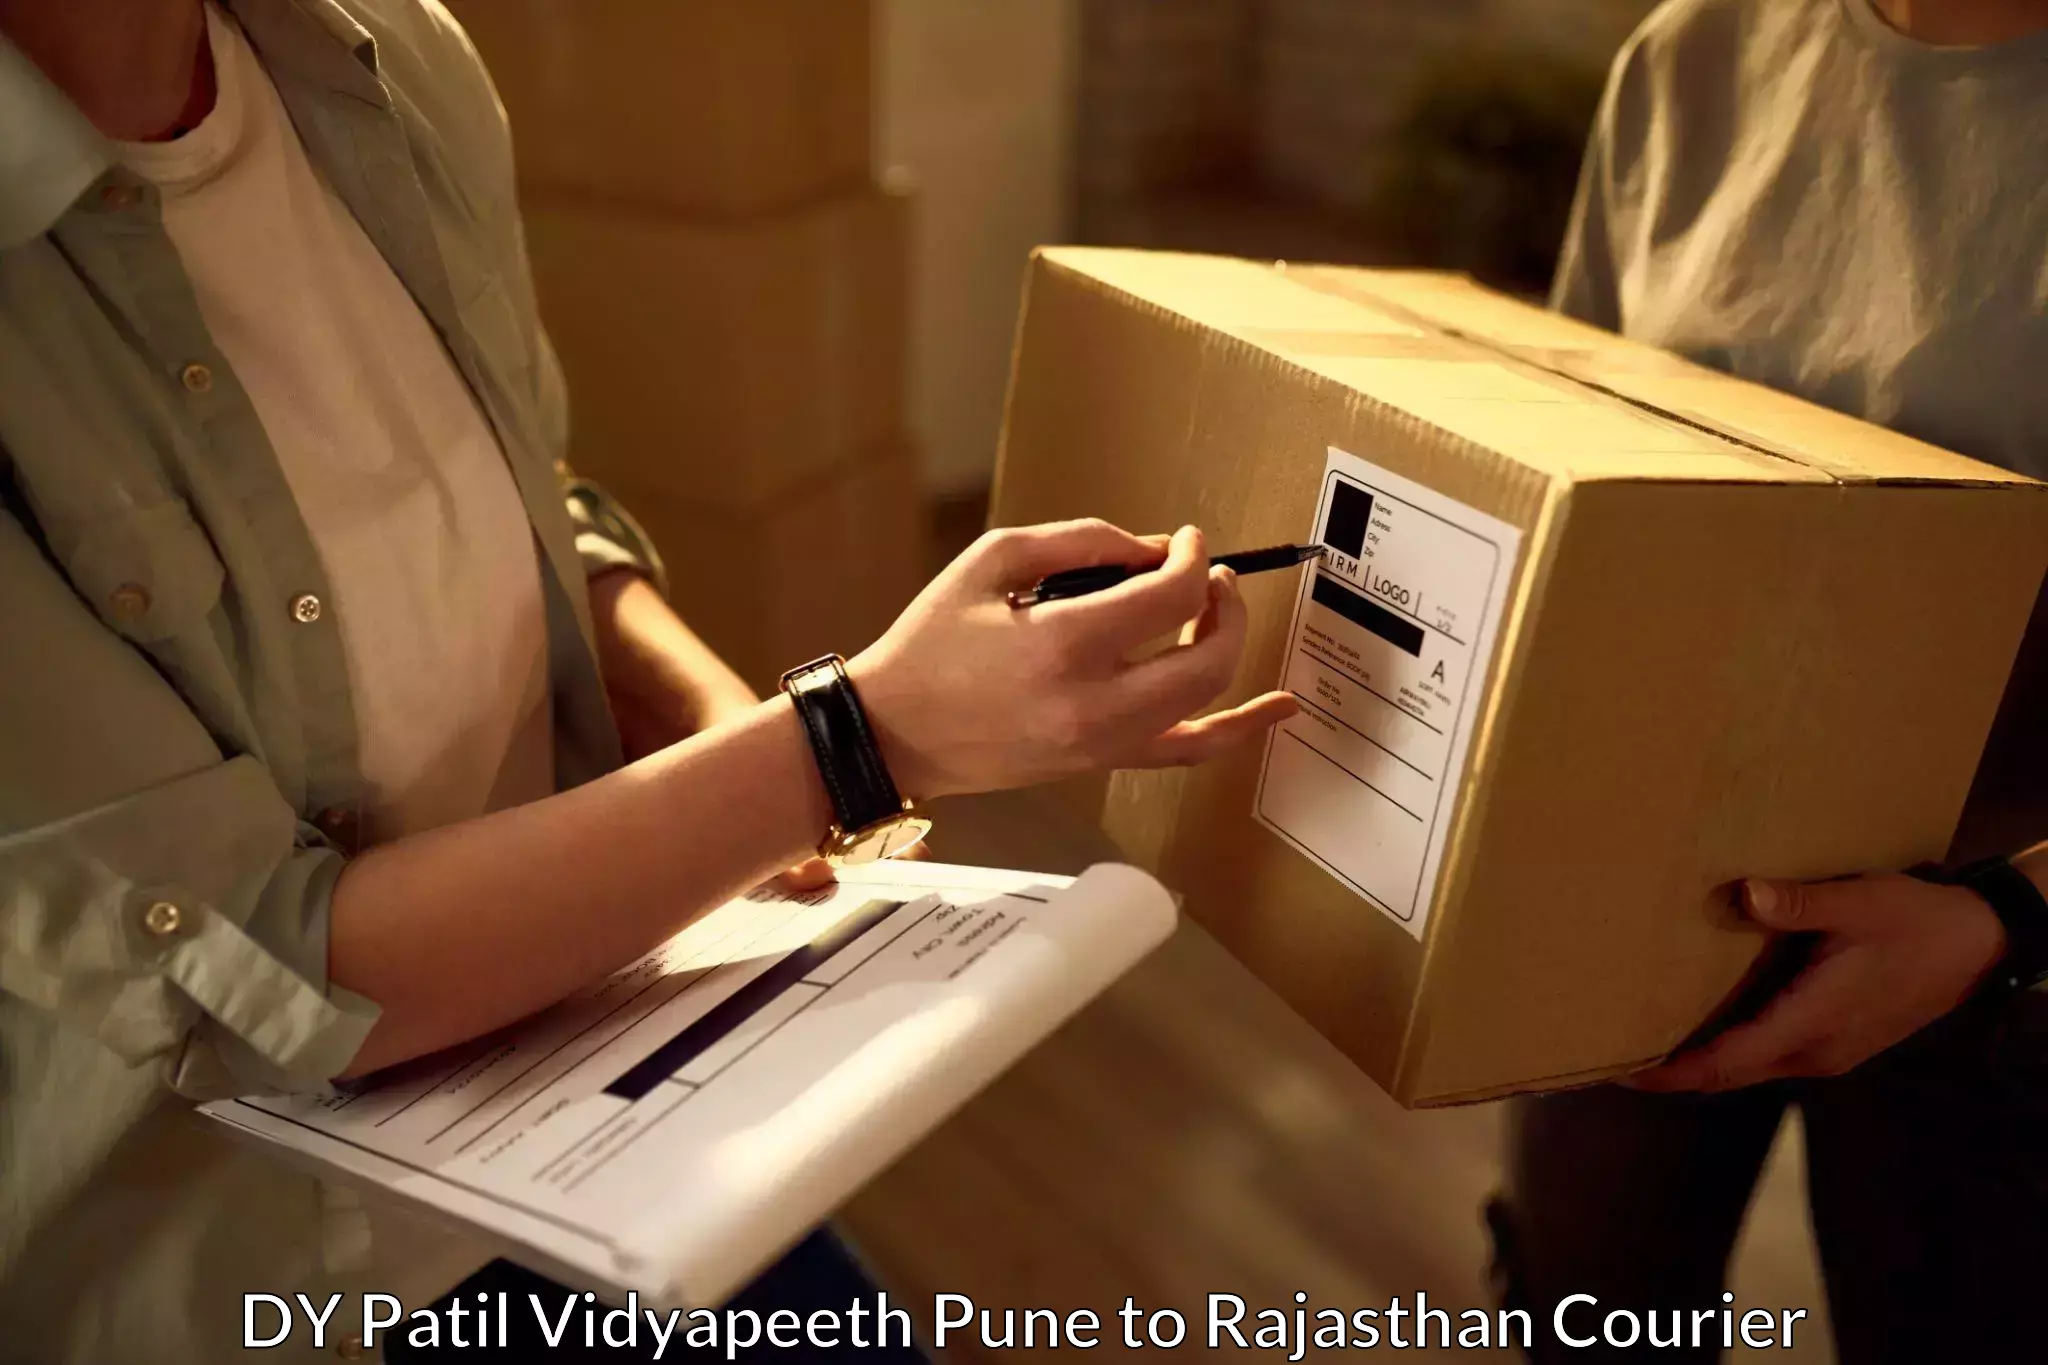 Bulk courier orders DY Patil Vidyapeeth Pune to Shrimadhopur